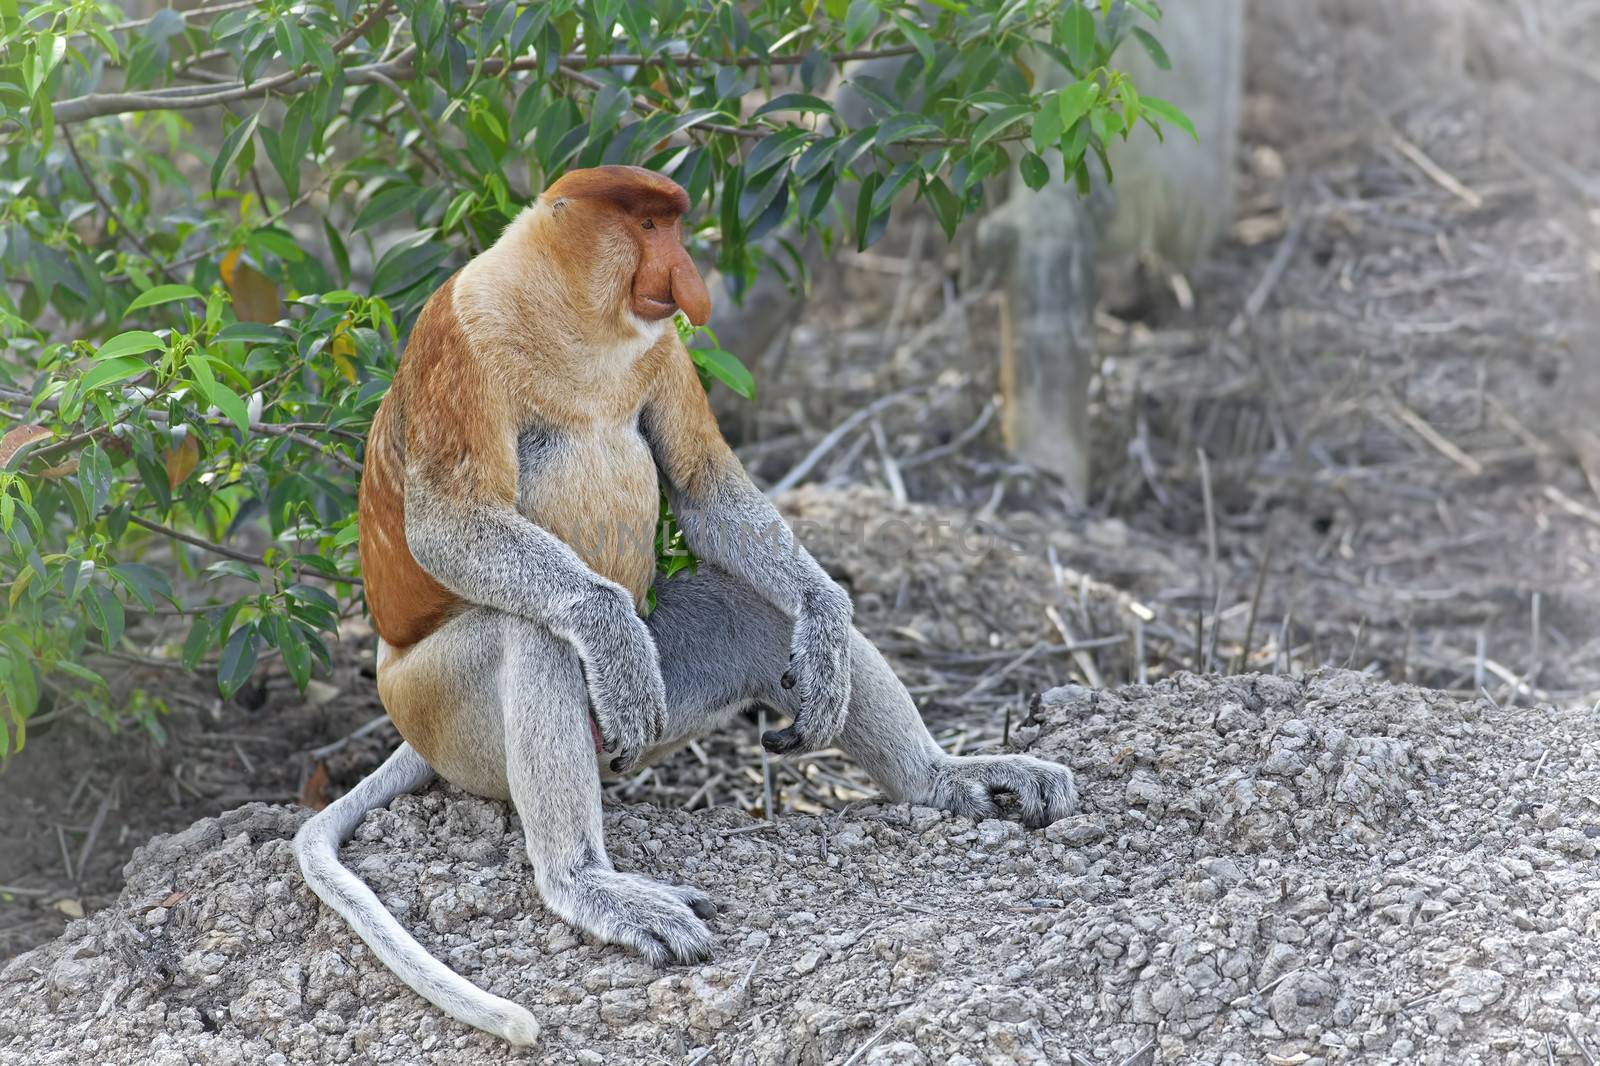 Proboscis monkey by kjorgen